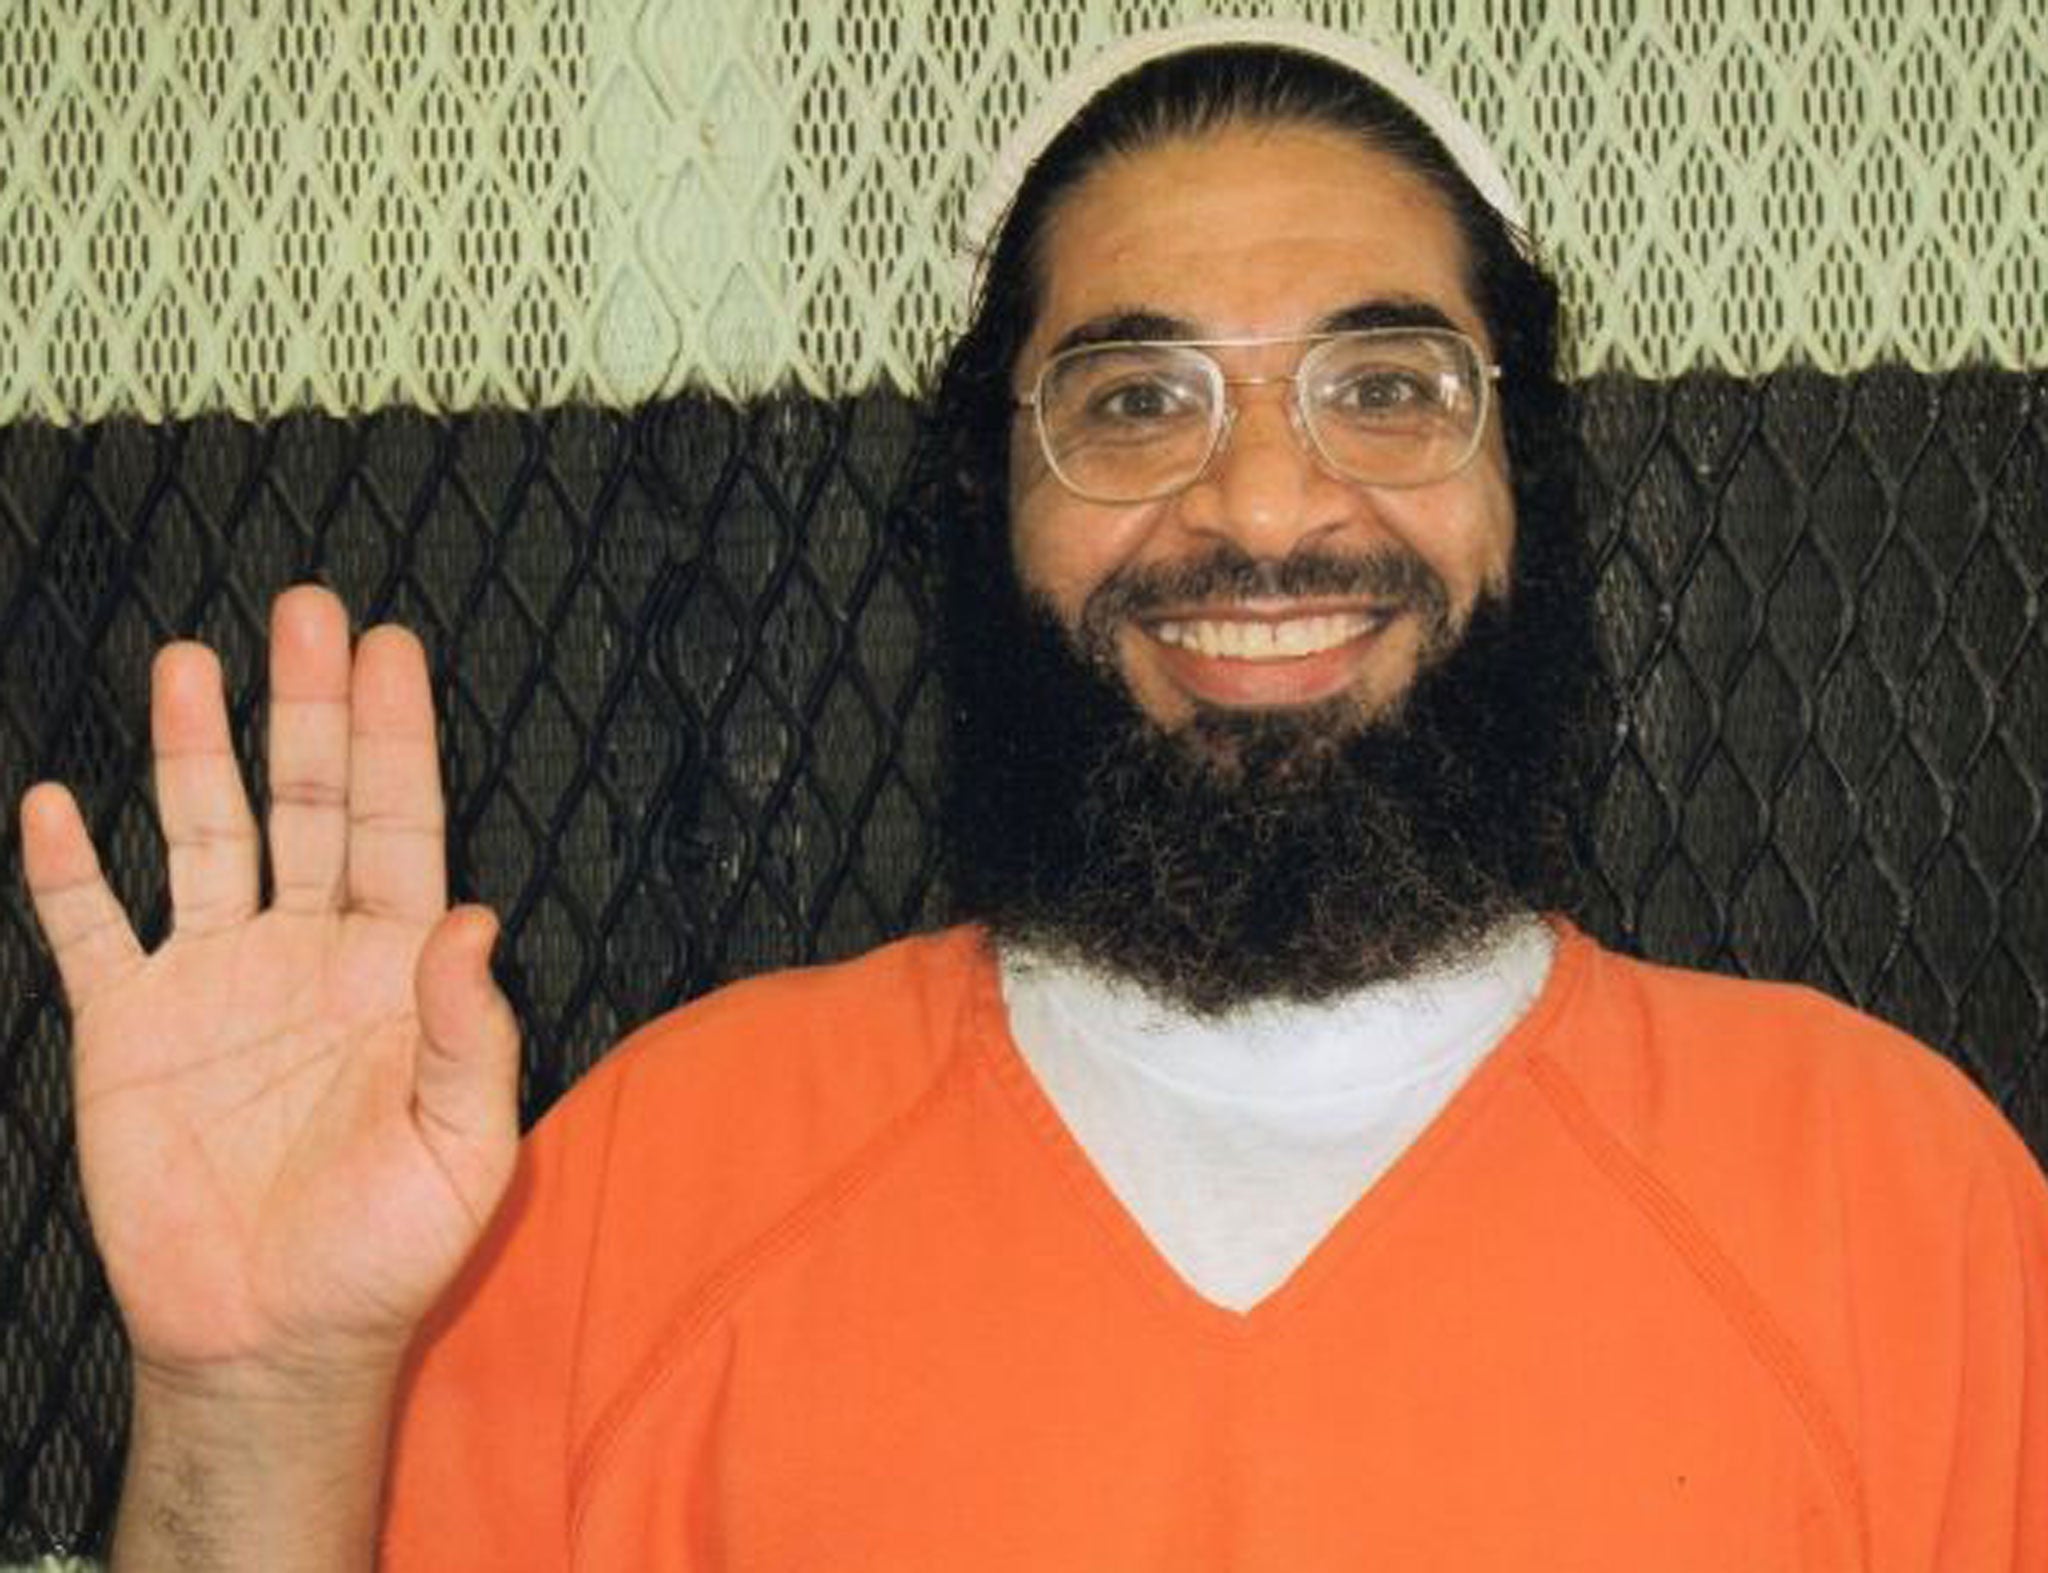 Shaker Aamer, the last British inmate at Guantanamo Bay